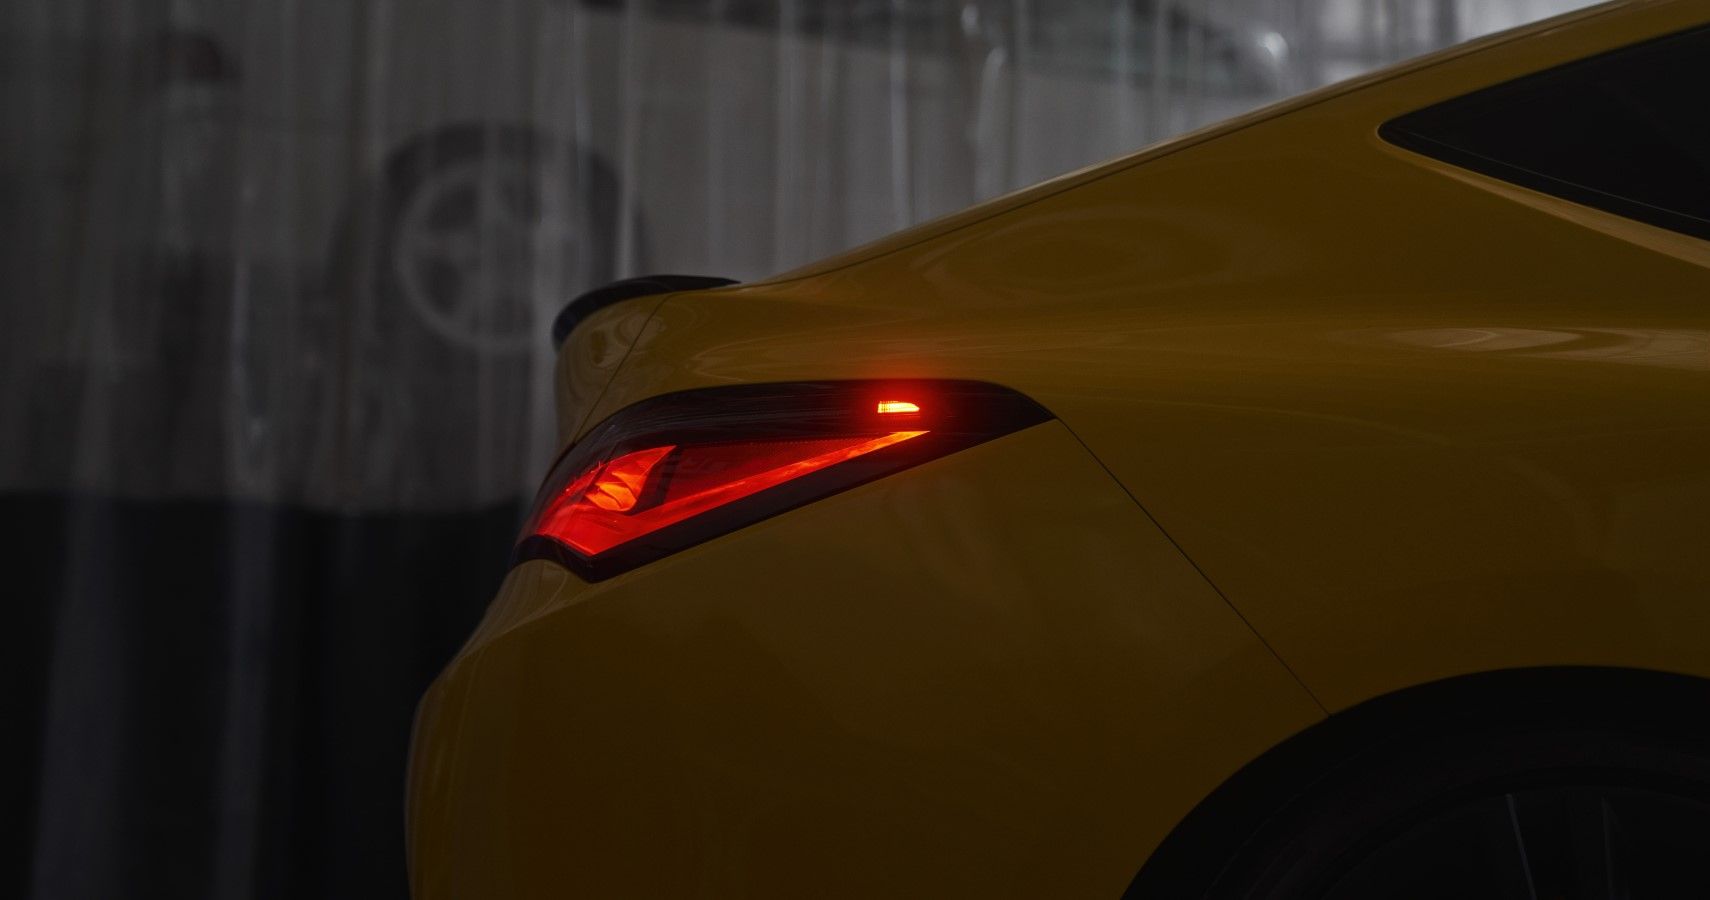 2023 Acura Integra Prototype rear third quarter close-up view